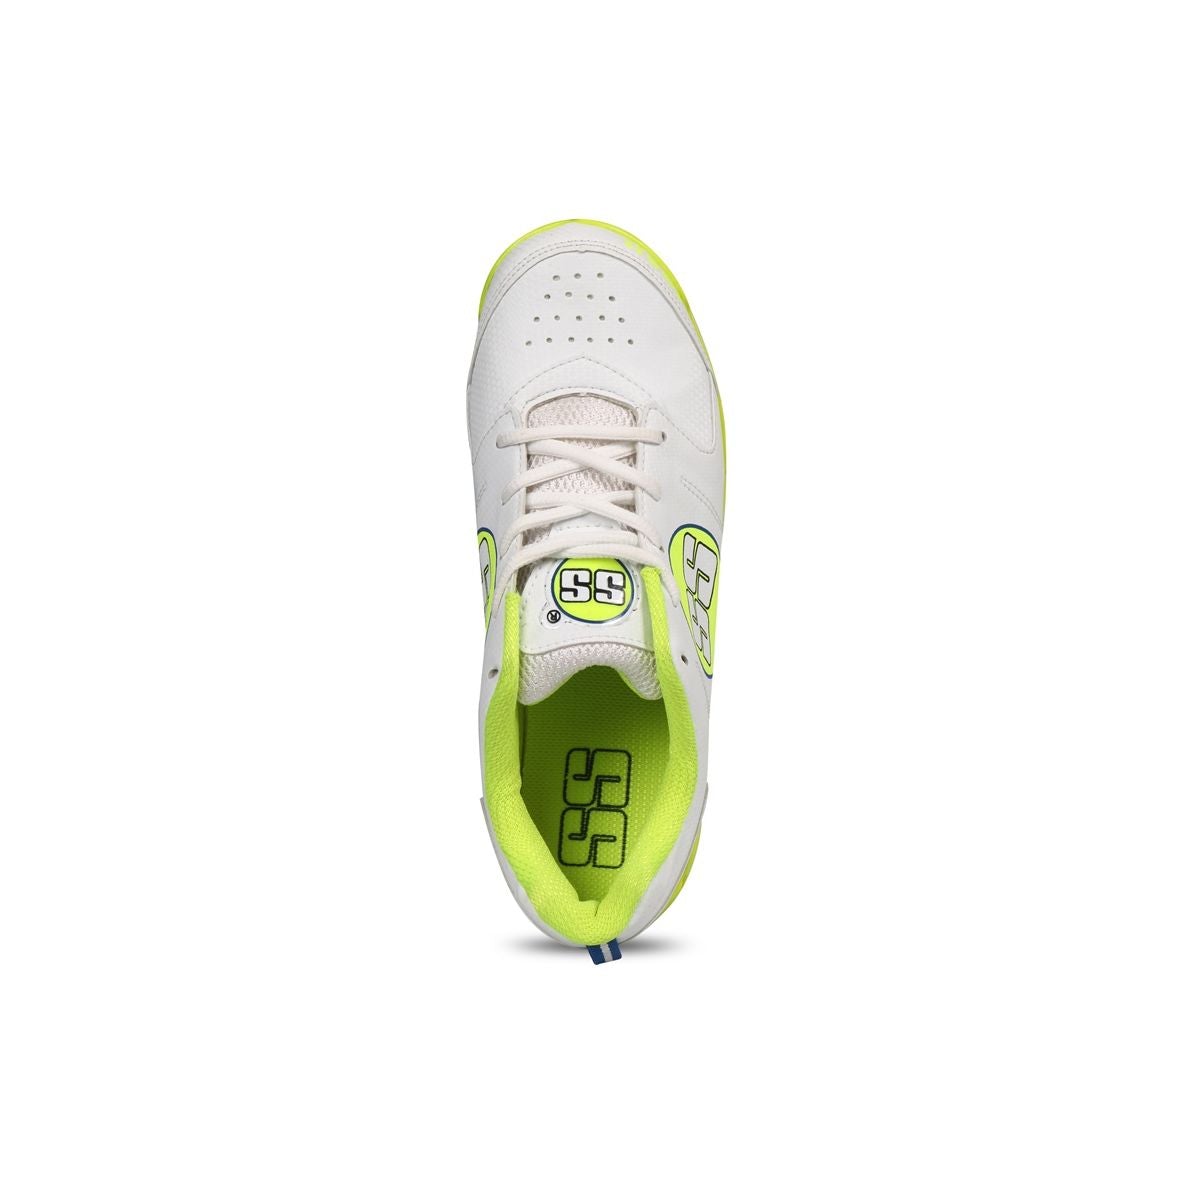 SS Josh Cricket Shoes - Lime-Cricket Shoes-Pro Sports